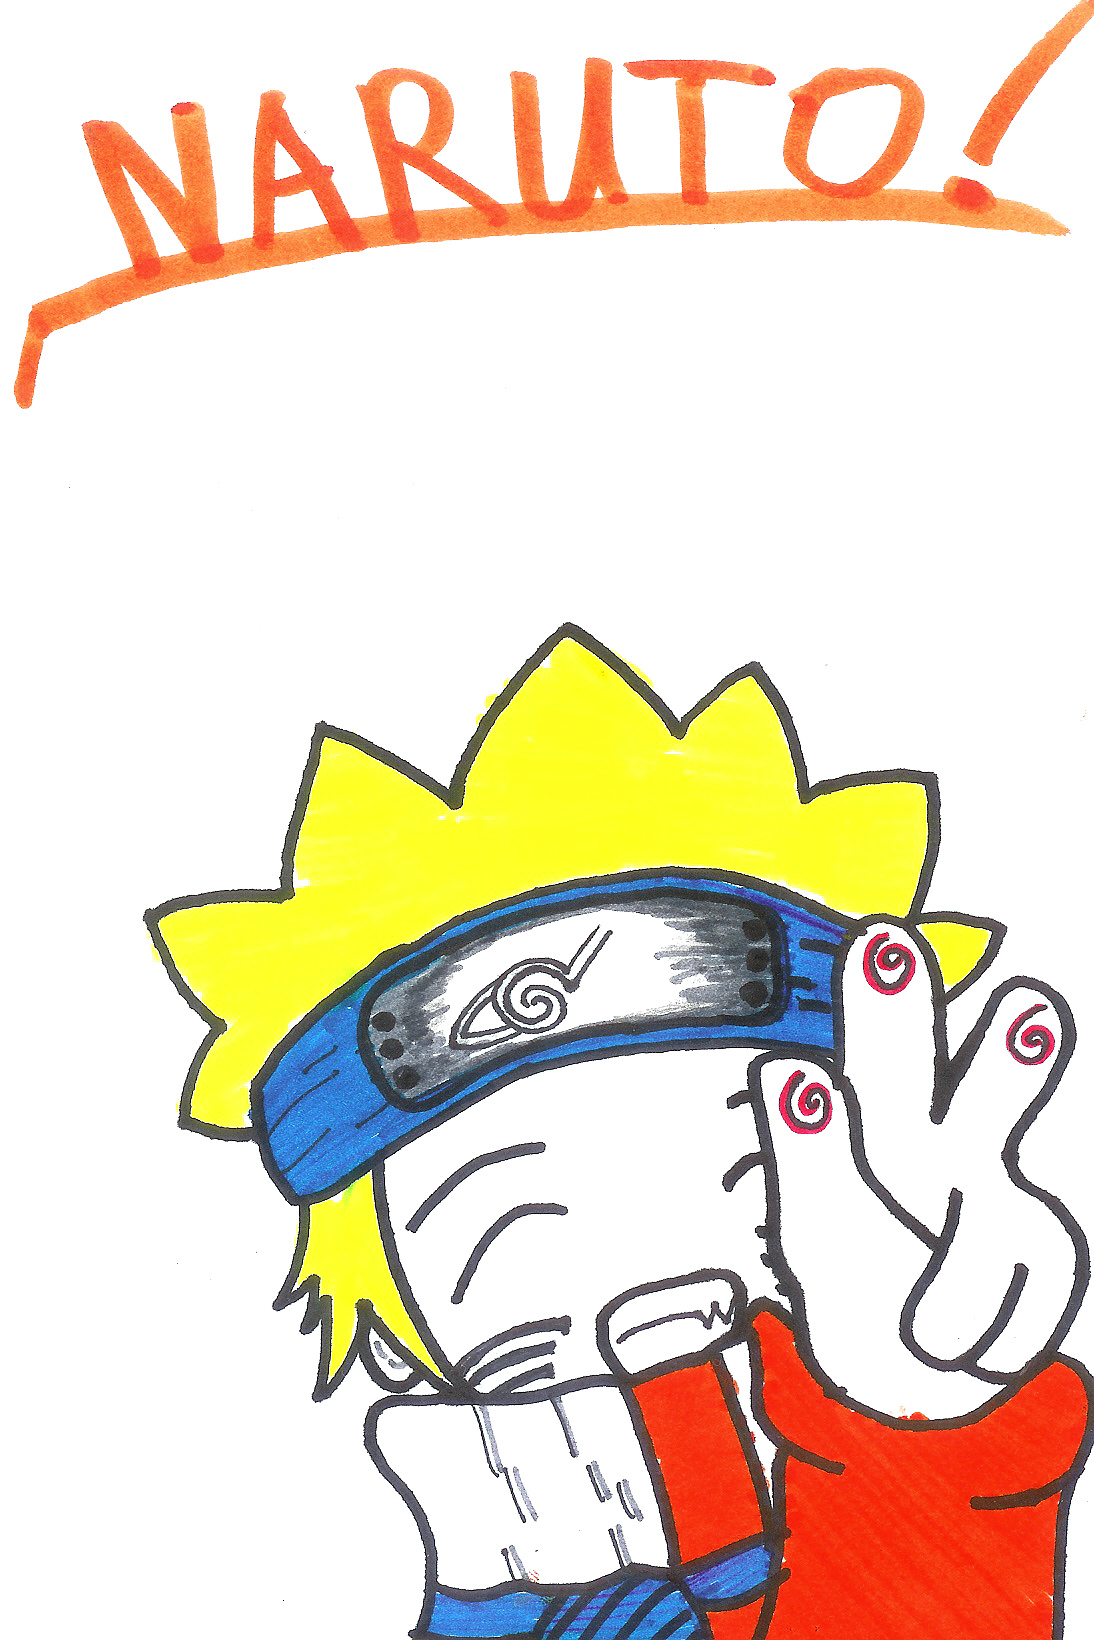 Naruto Chibi! by Quagmiregiggitgiggity